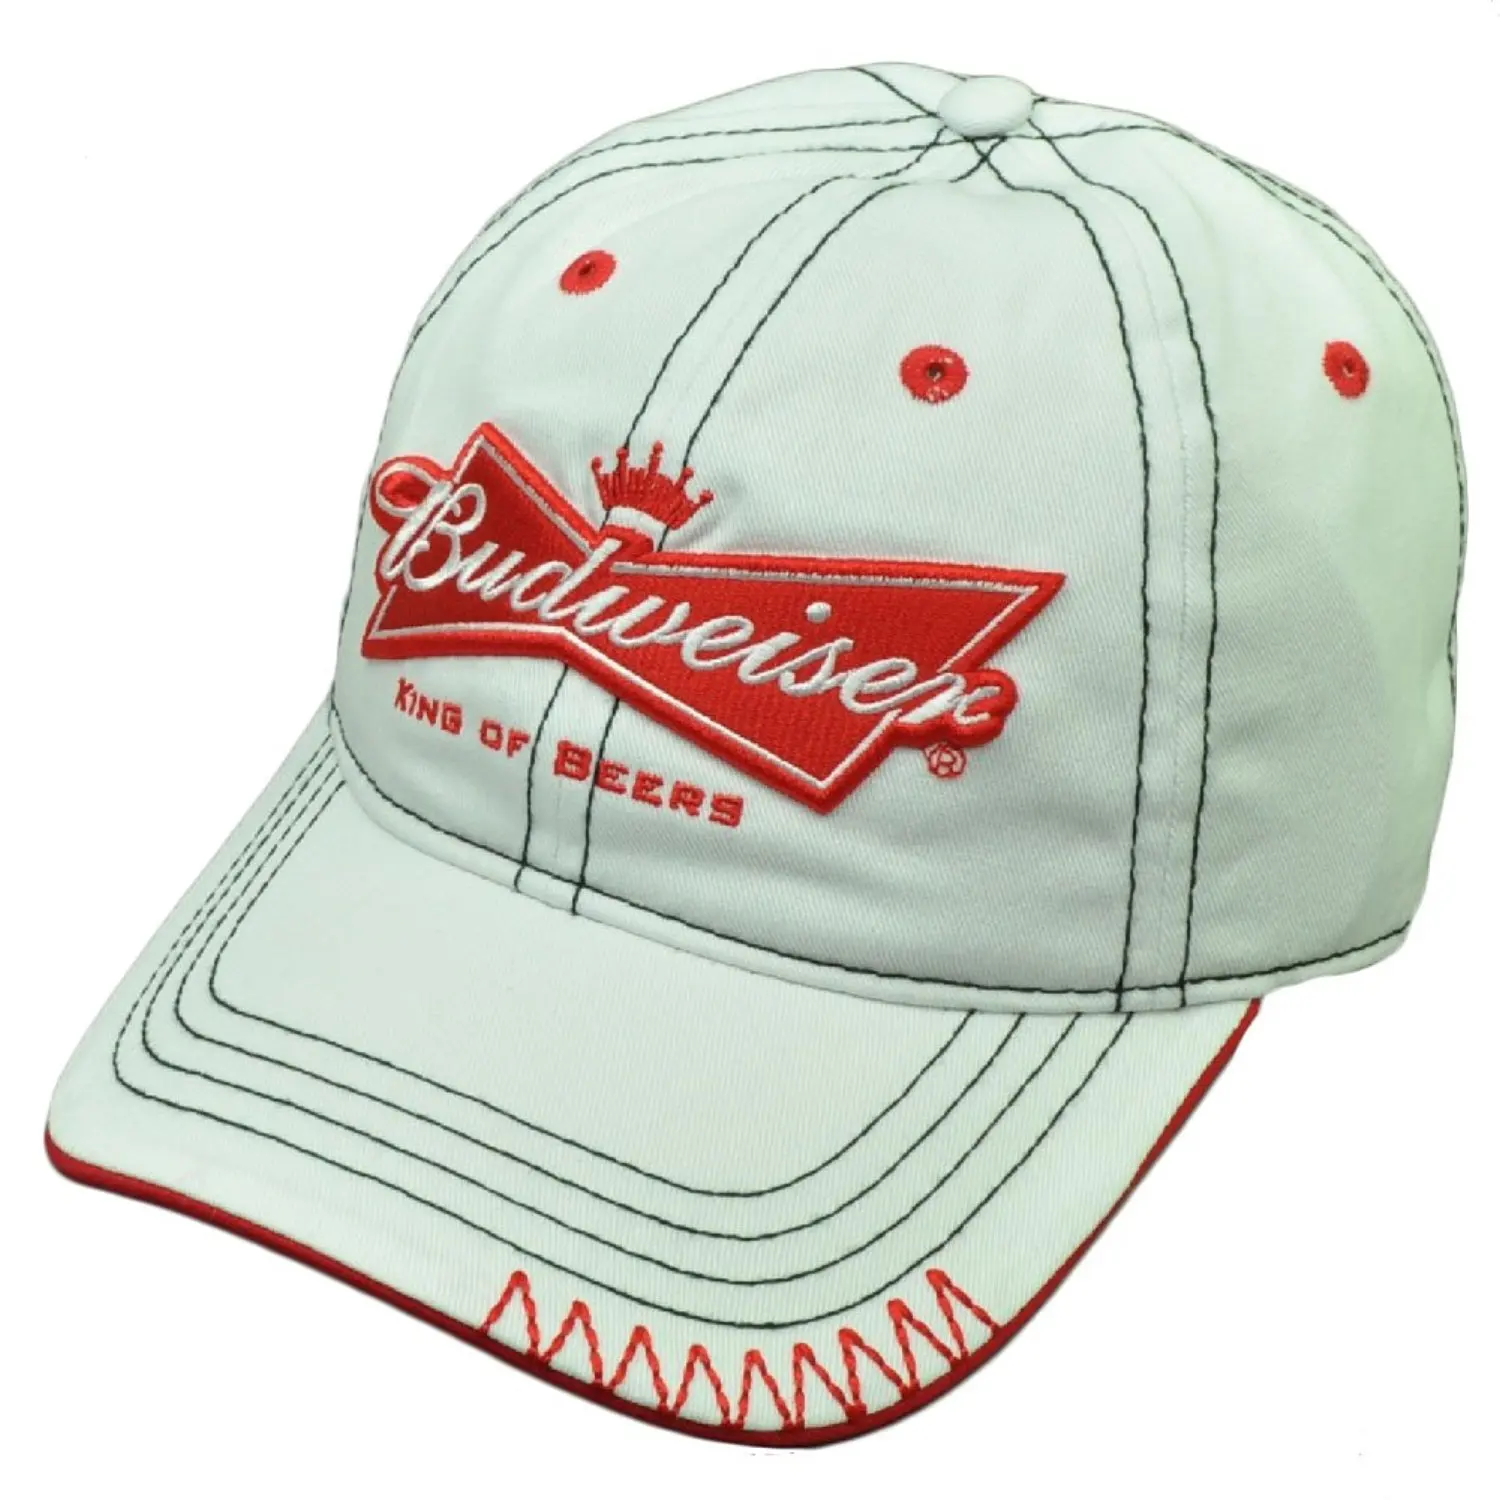 Cheap Budweiser Hat, find Budweiser Hat deals on line at Alibaba.com